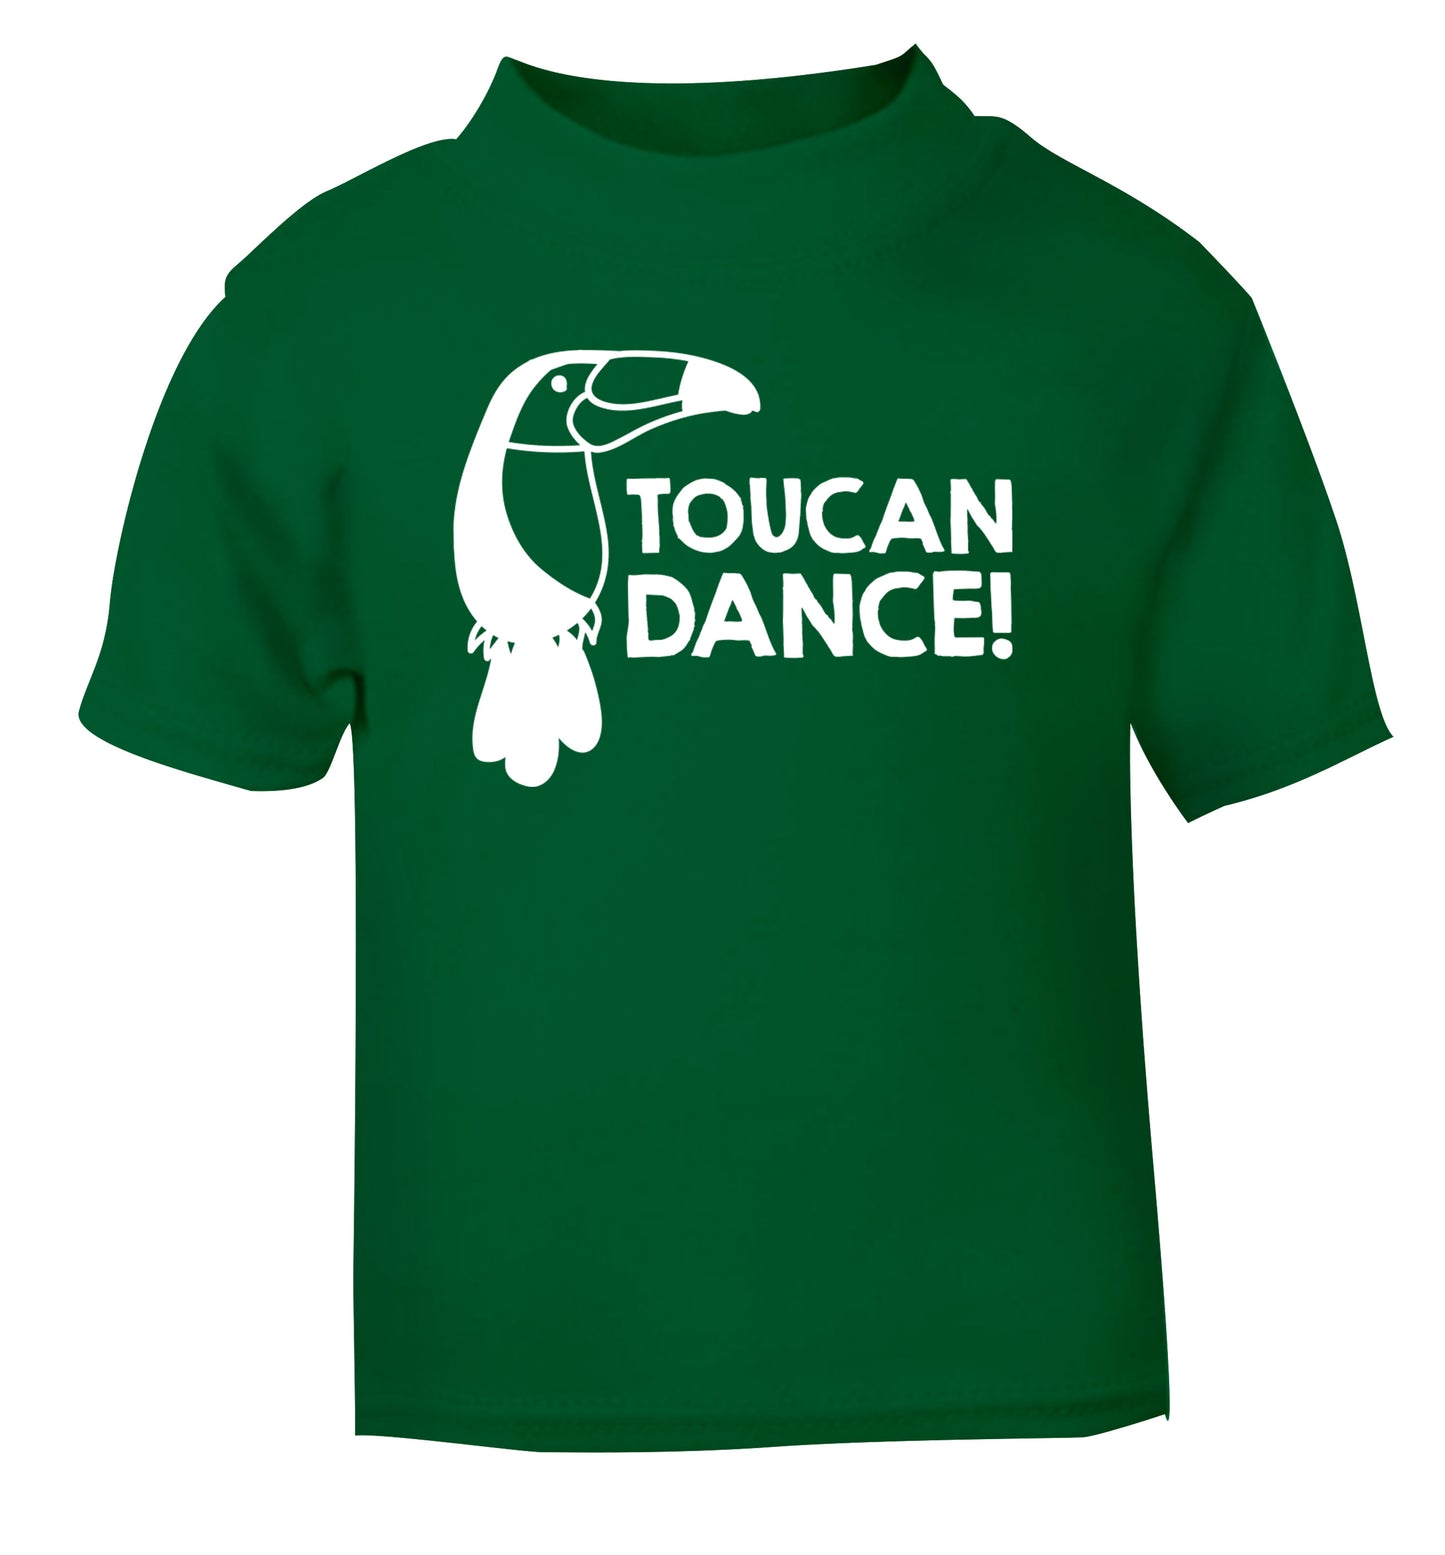 Toucan dance green Baby Toddler Tshirt 2 Years